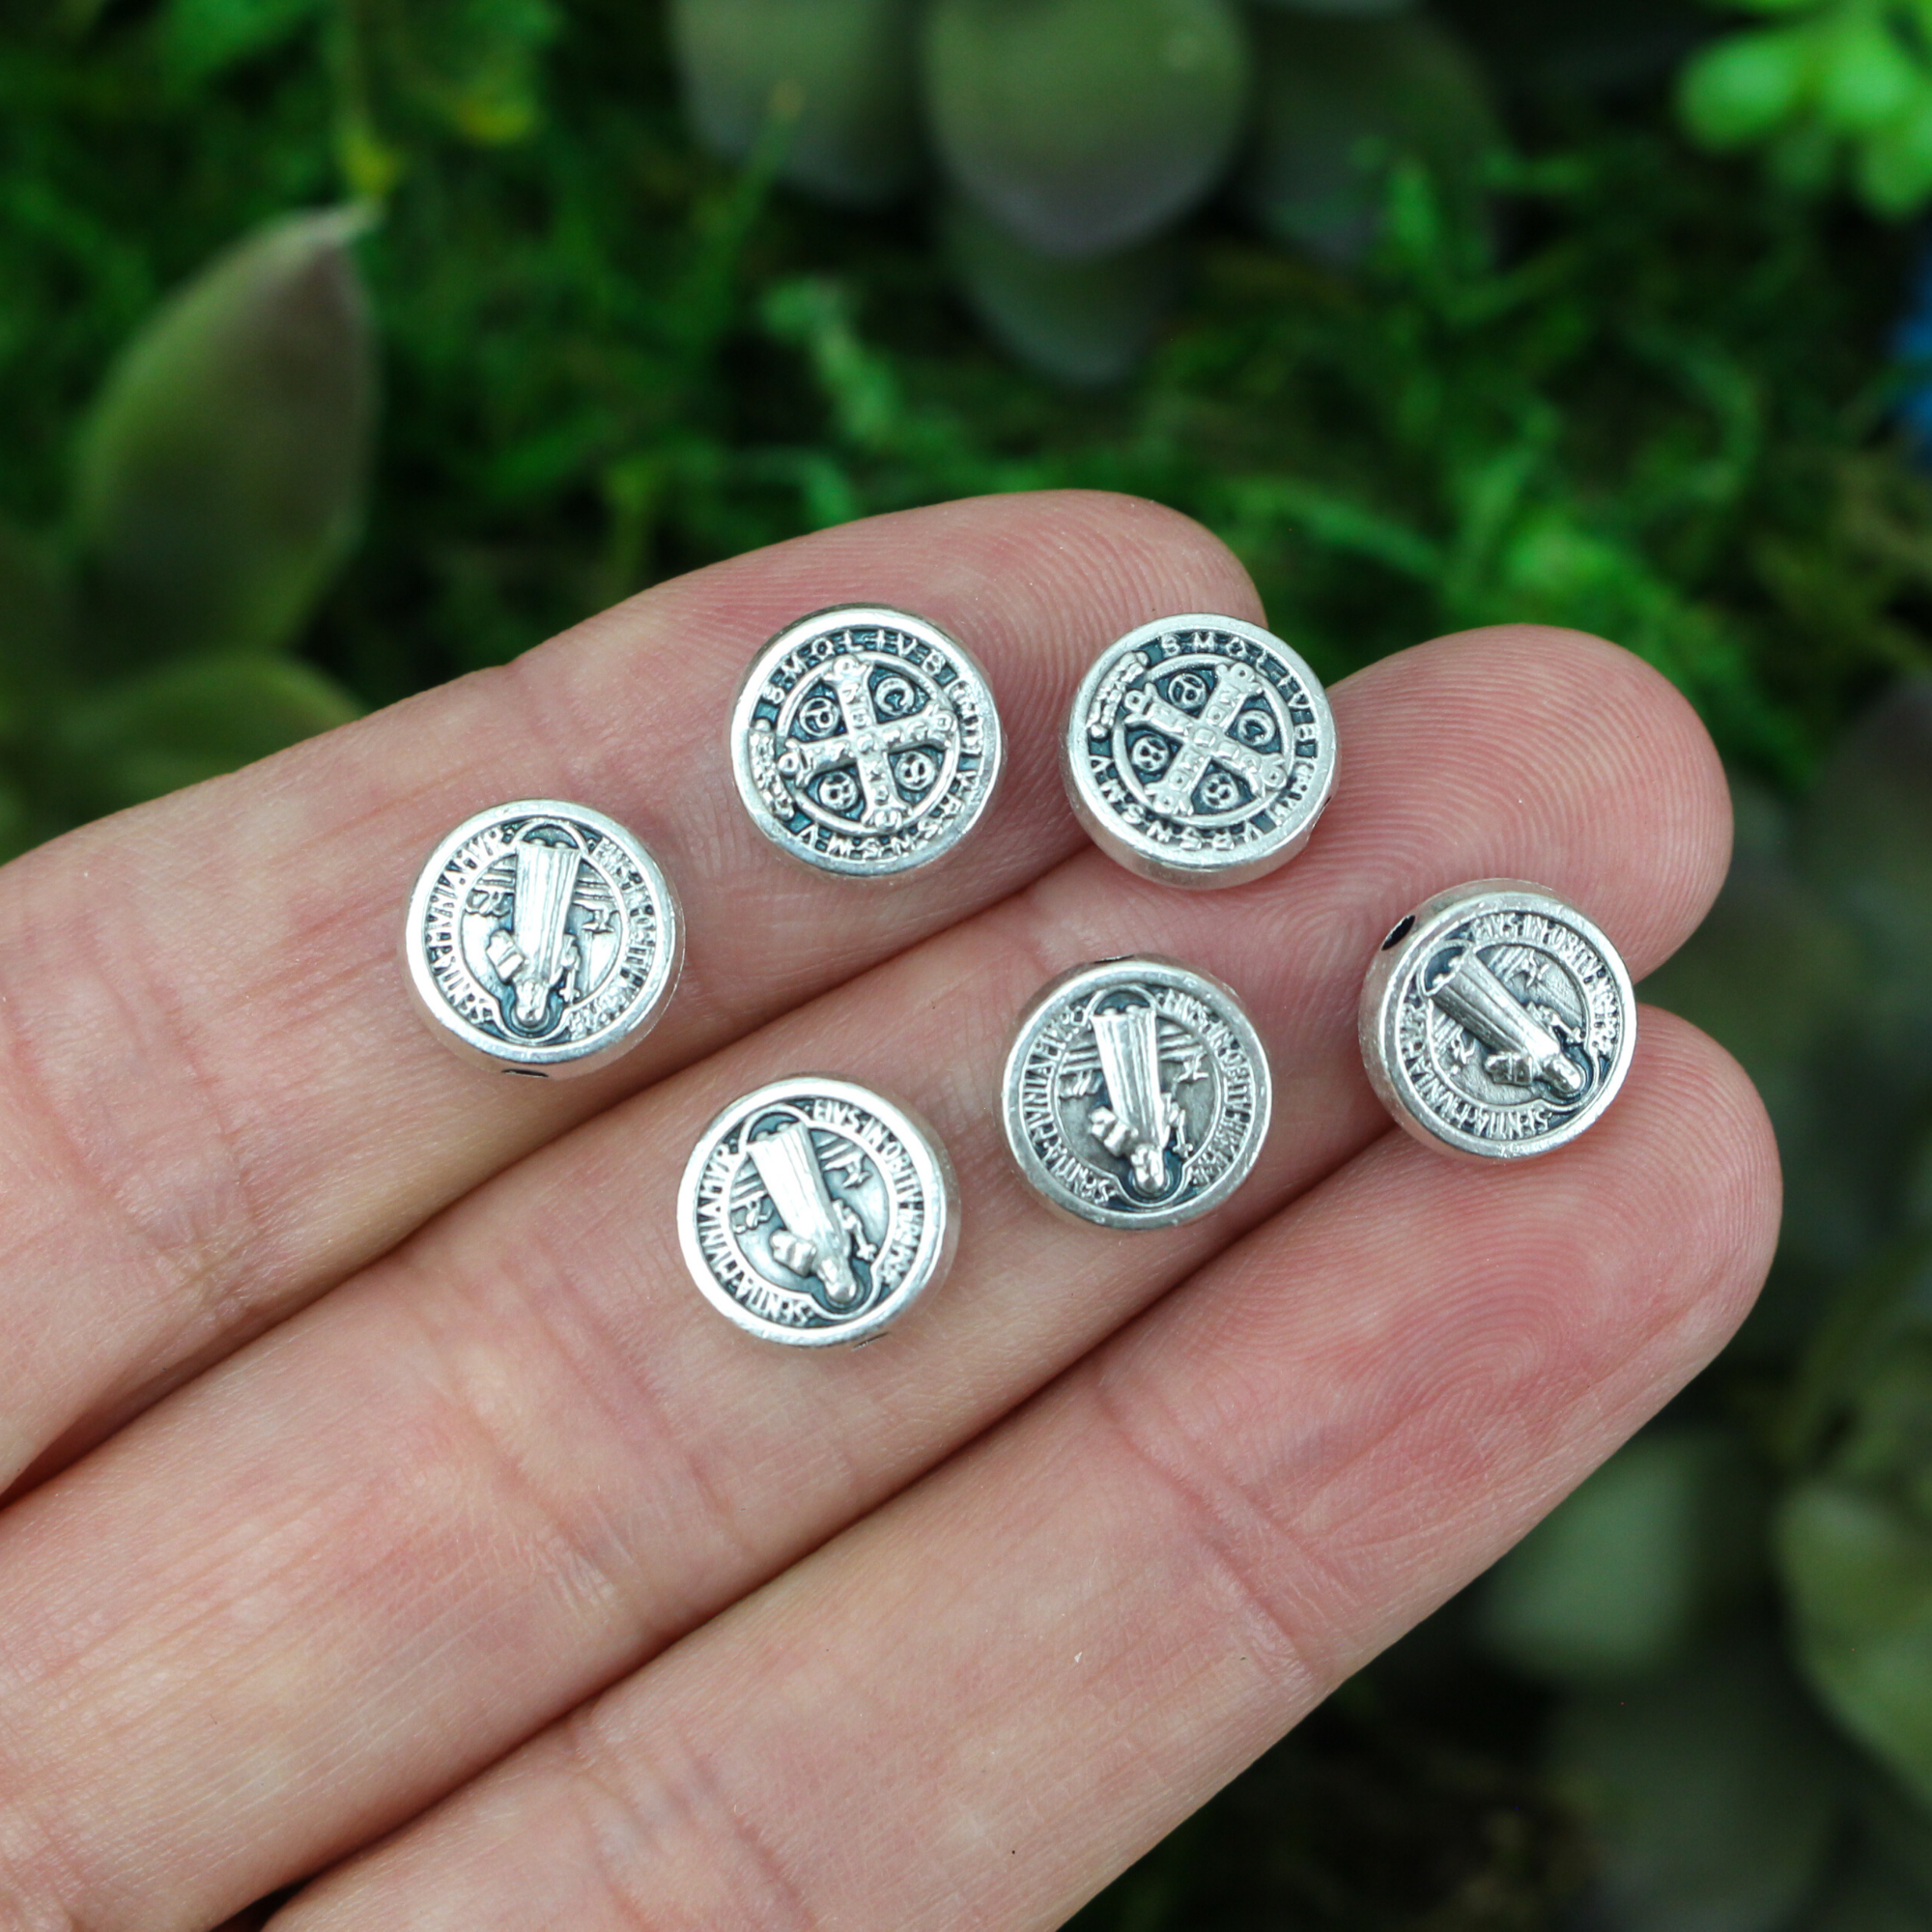 saint benedict metal spacer beads 9mm in diameter silver color